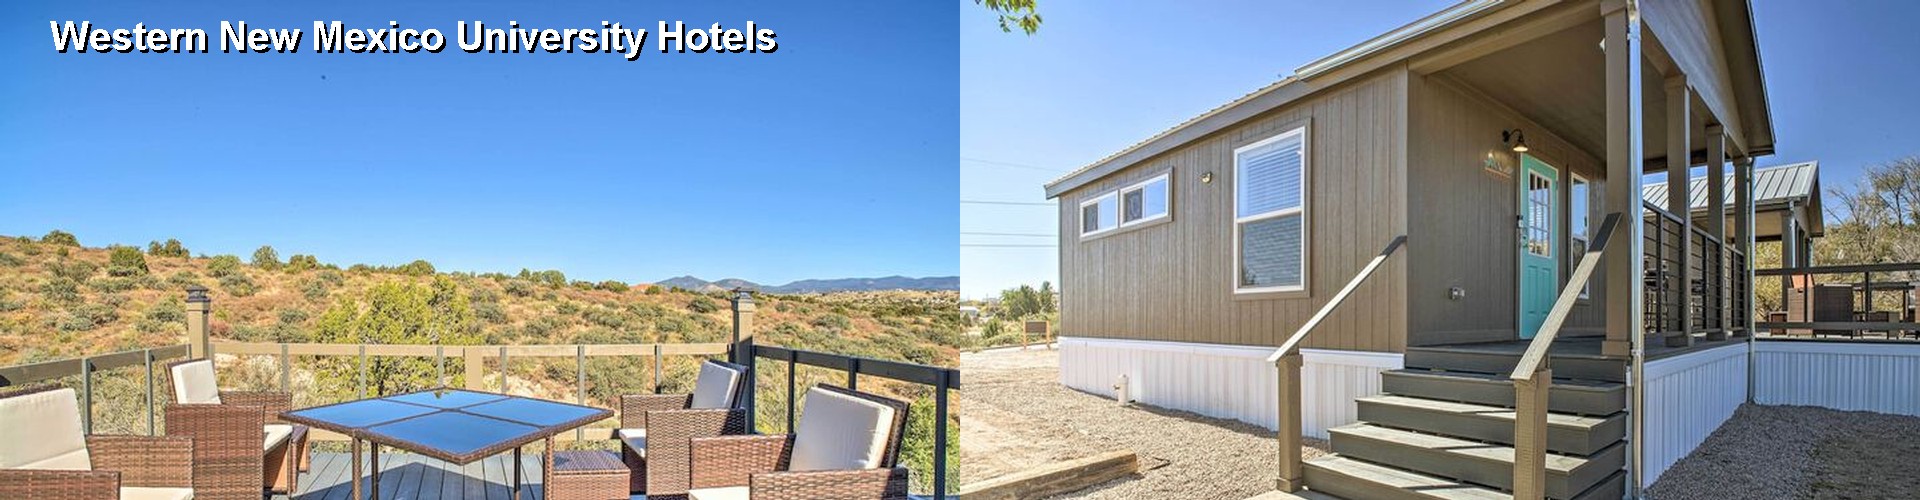 3 Best Hotels near Western New Mexico University